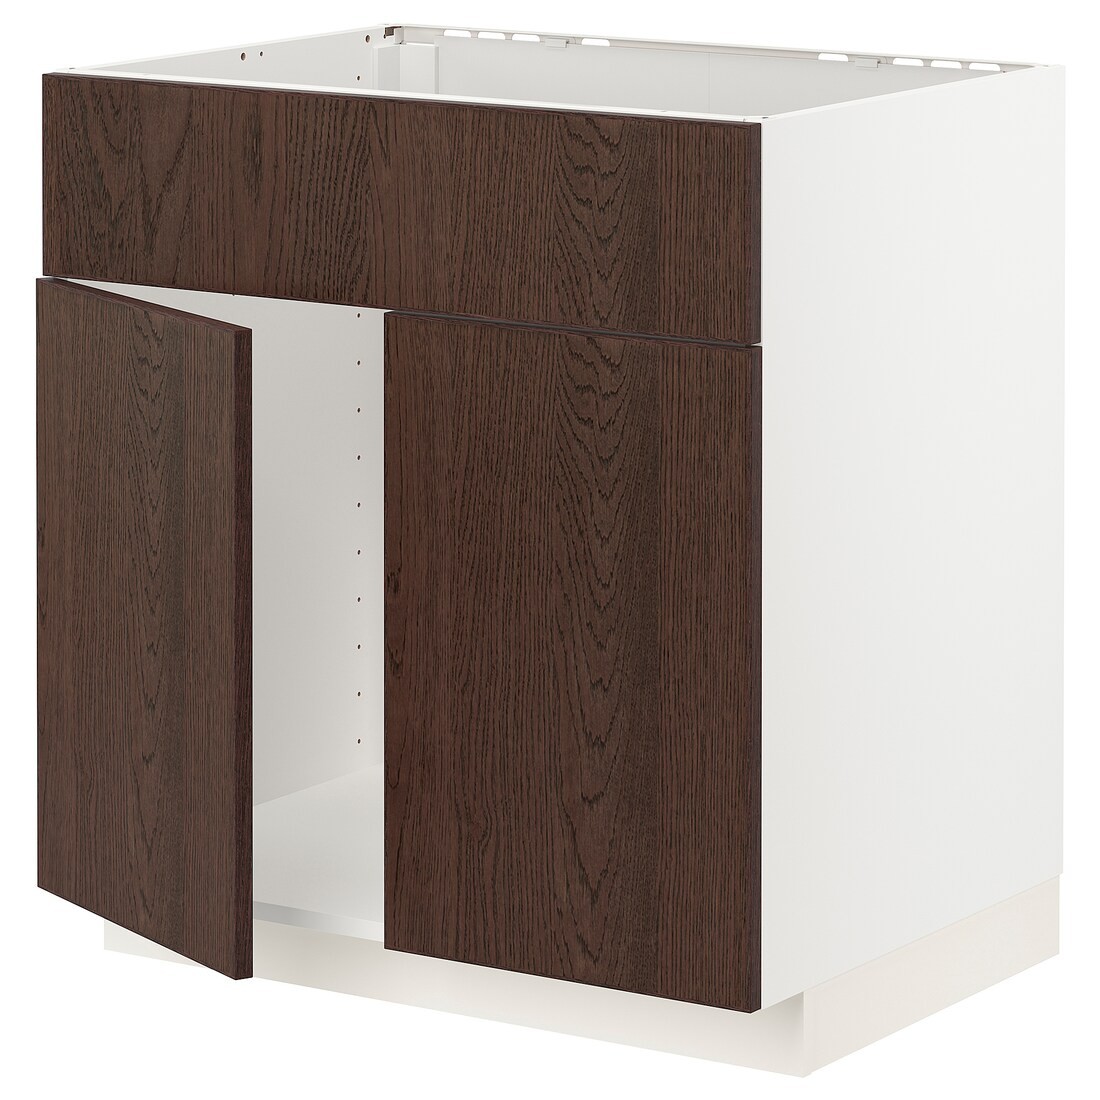 IKEA METOD МЕТОД Напольн шкаф под мойку, белый / Sinarp коричневый, 80x60 см 79460517 | 794.605.17